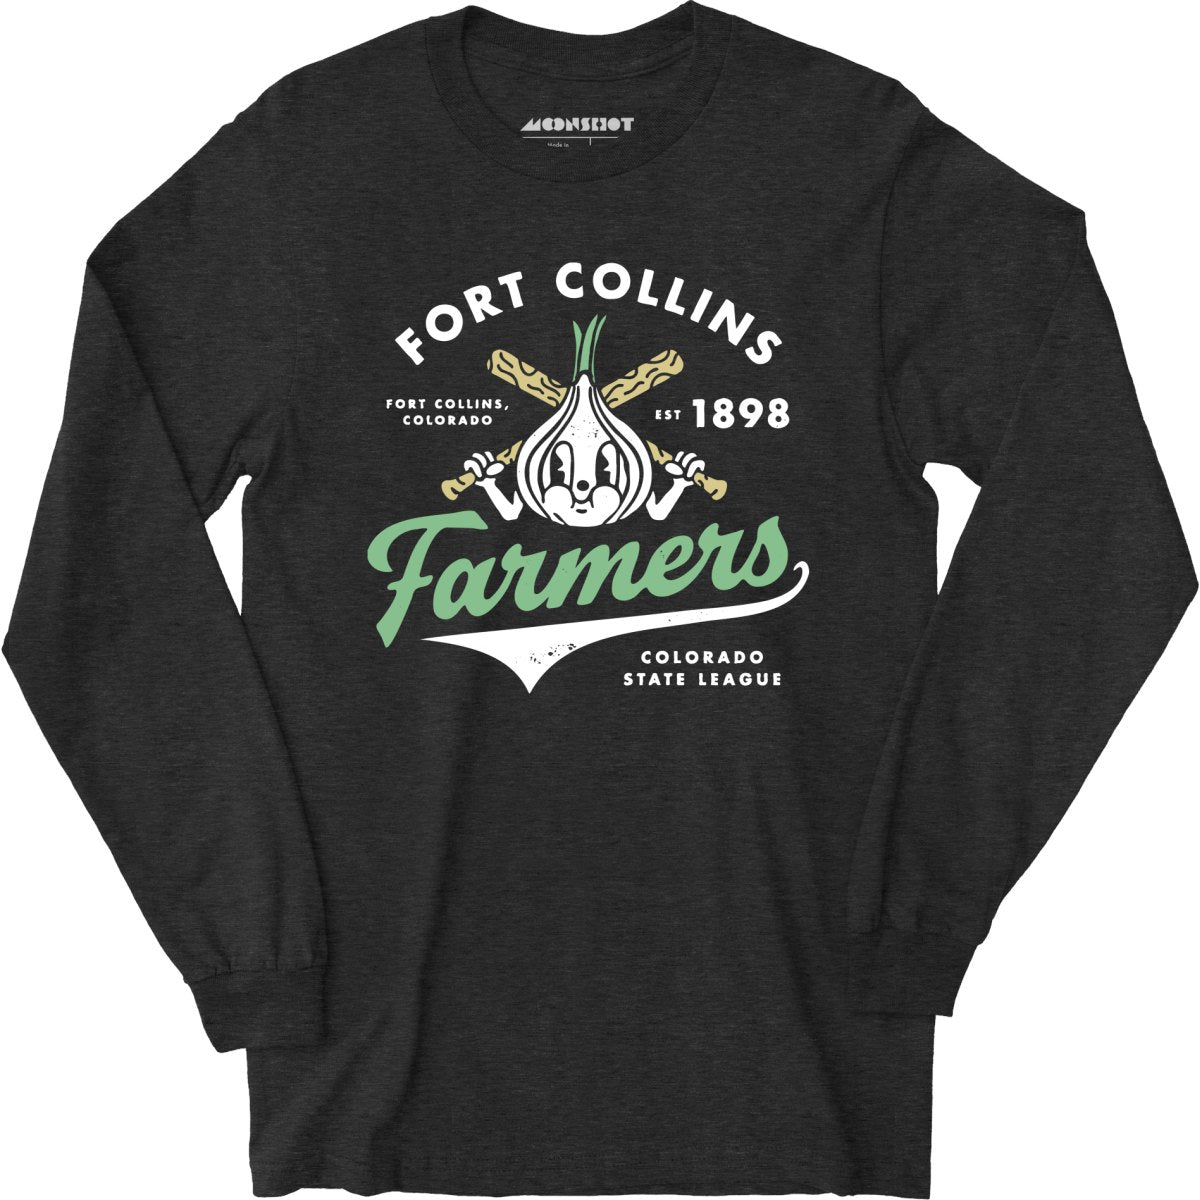 Fort Collins Farmers - Colorado - Vintage Defunct Baseball Teams - Long Sleeve T-Shirt